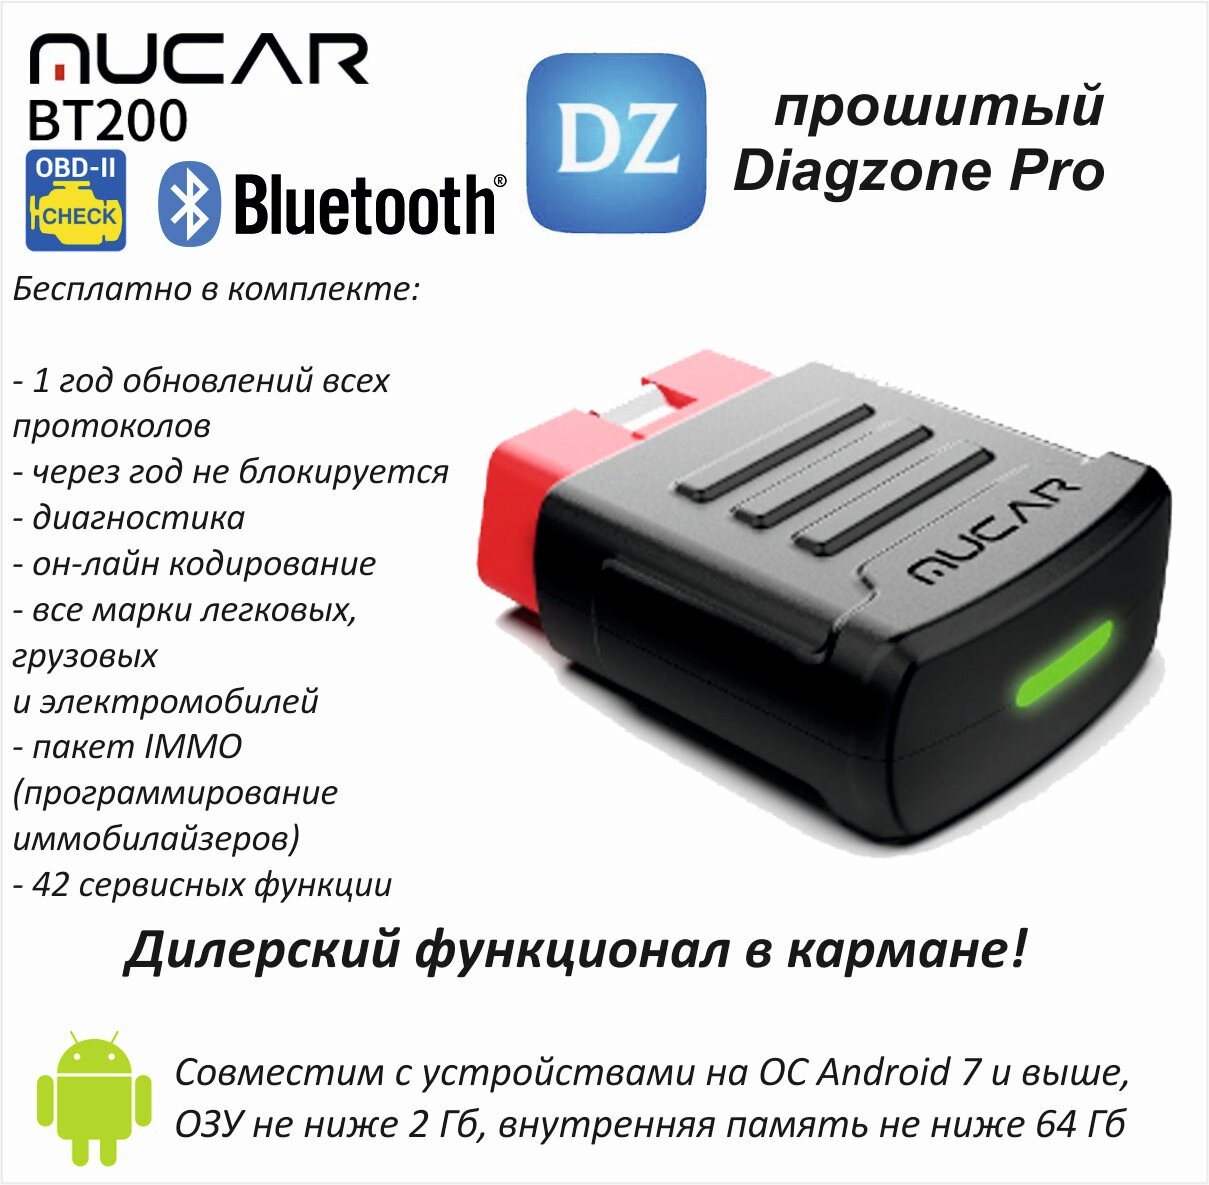 Сканер для авто Mucar bt200 Diagzon pro безлимит